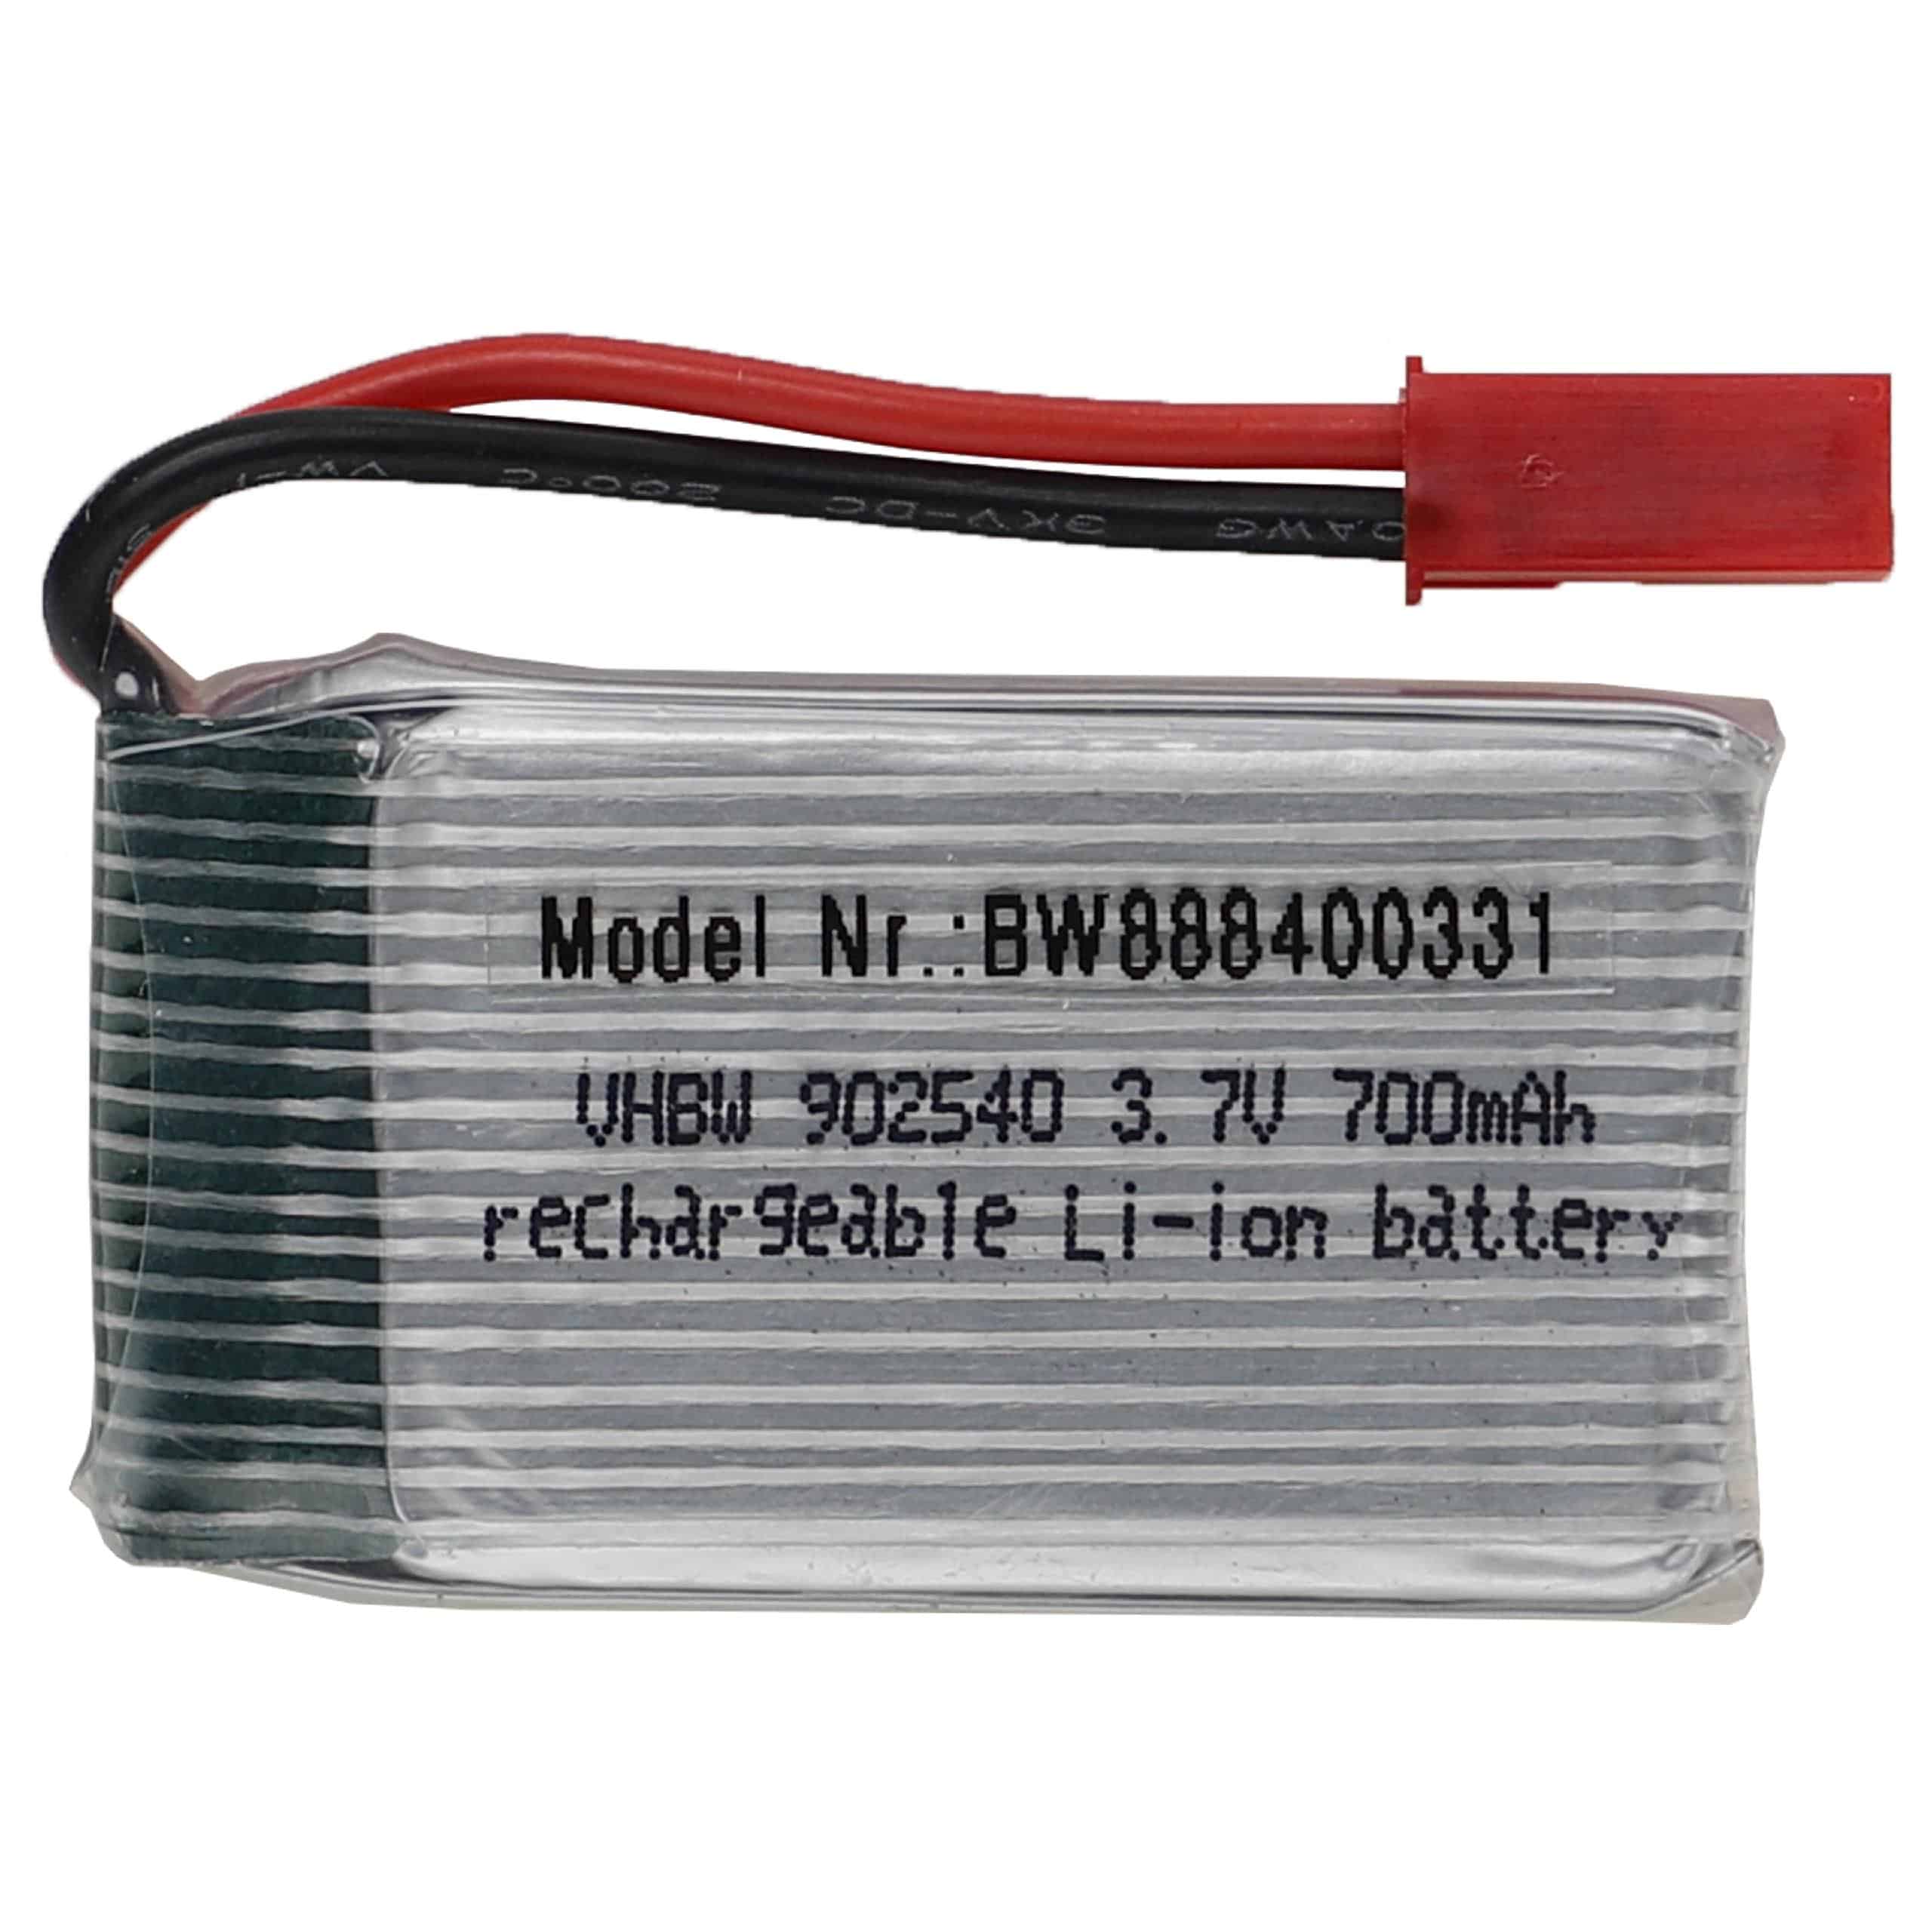 Akumulator do modeli zdalnie sterowanych RC - 700 mAh 3,7 V LiPo, BEC